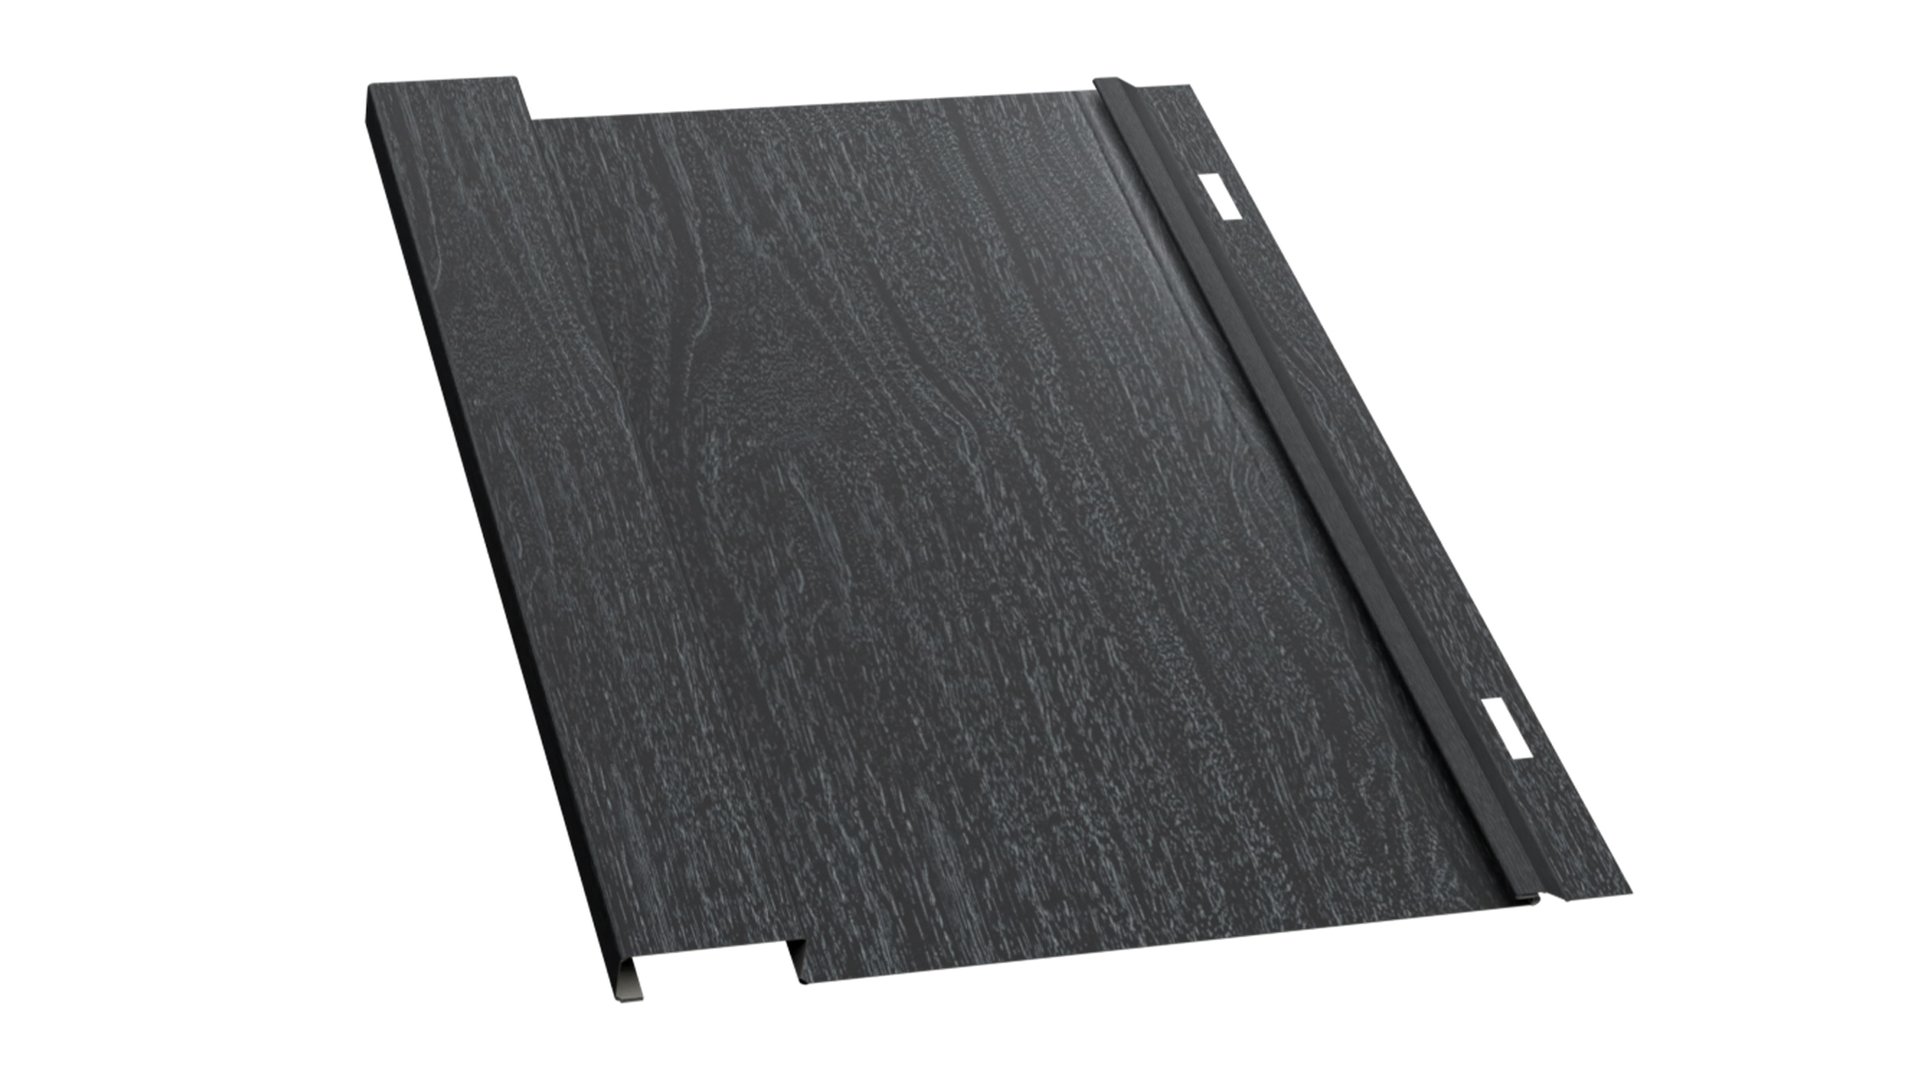 board-and-batten-panel-profile-black-wood